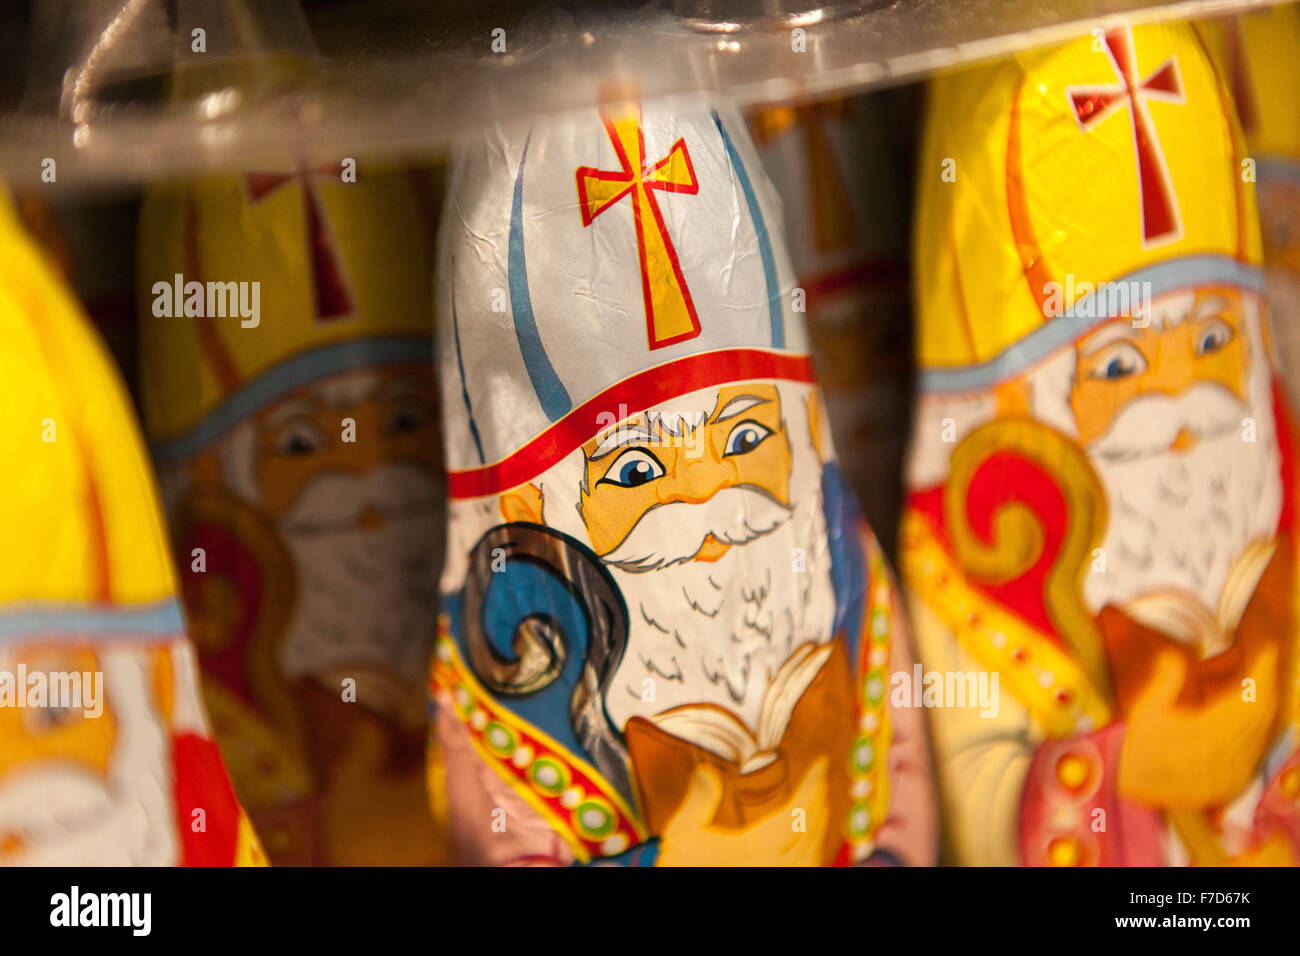 Chocolate figures of Saint Nicholas displayed in a supermarket shelf. Stock Photo